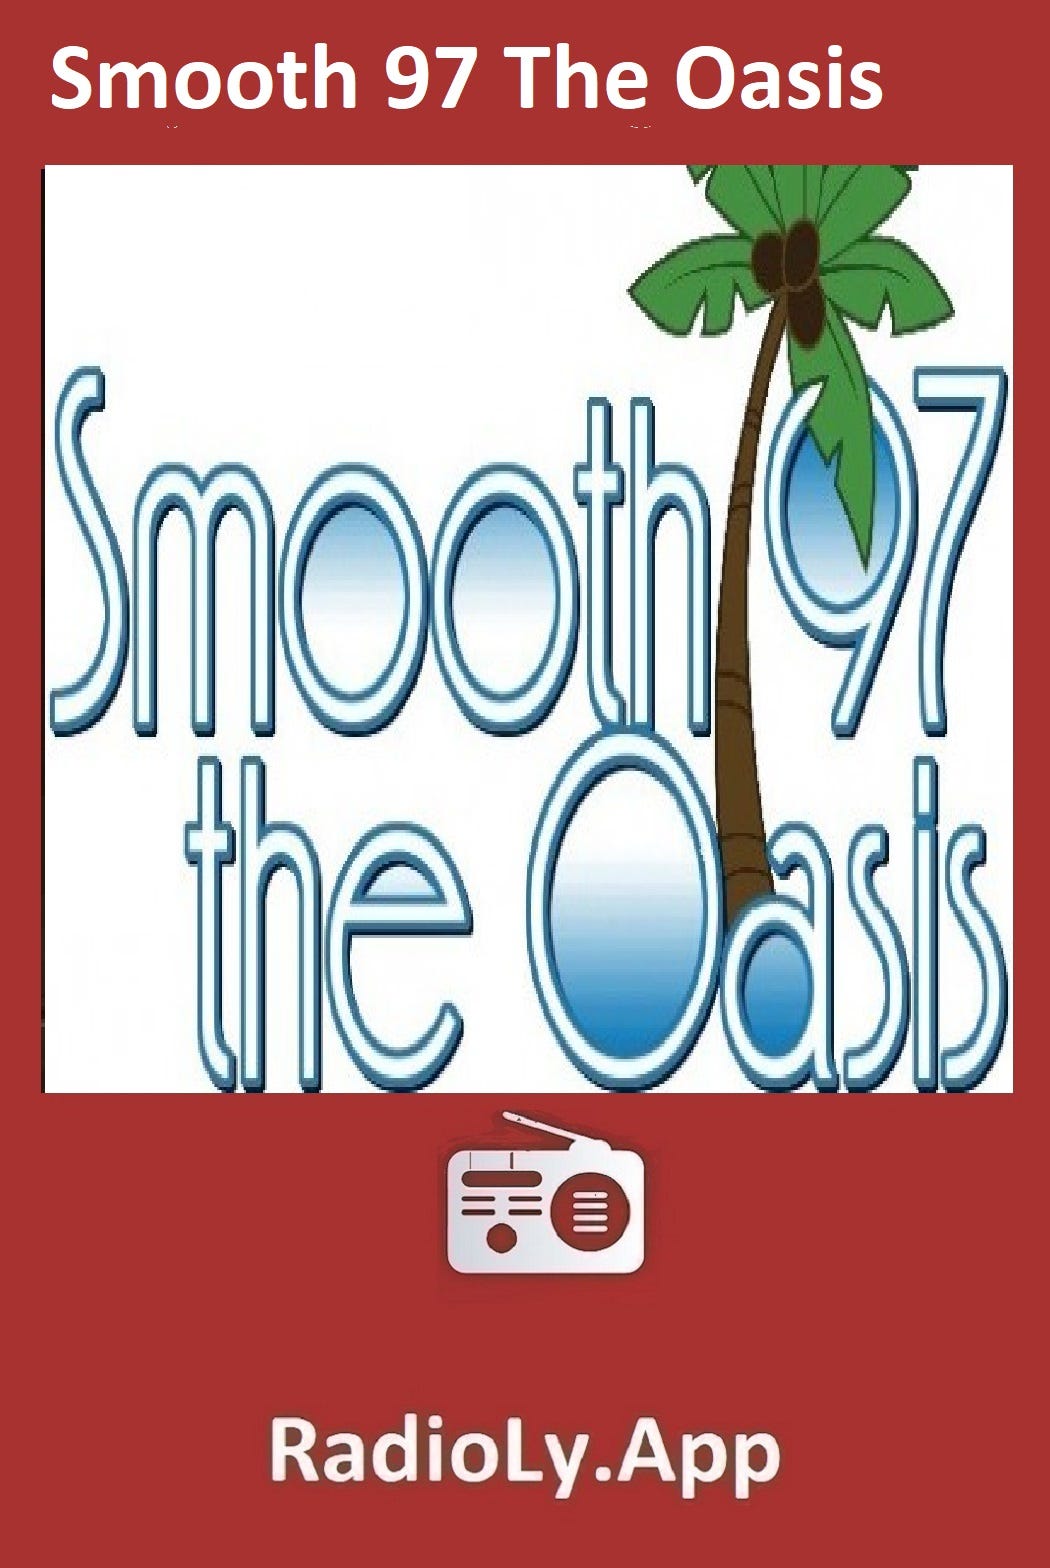 Smooth 97 The Oasis — USA Internet FM Radio Station Online — RadiolyApp -  Radioly - Medium